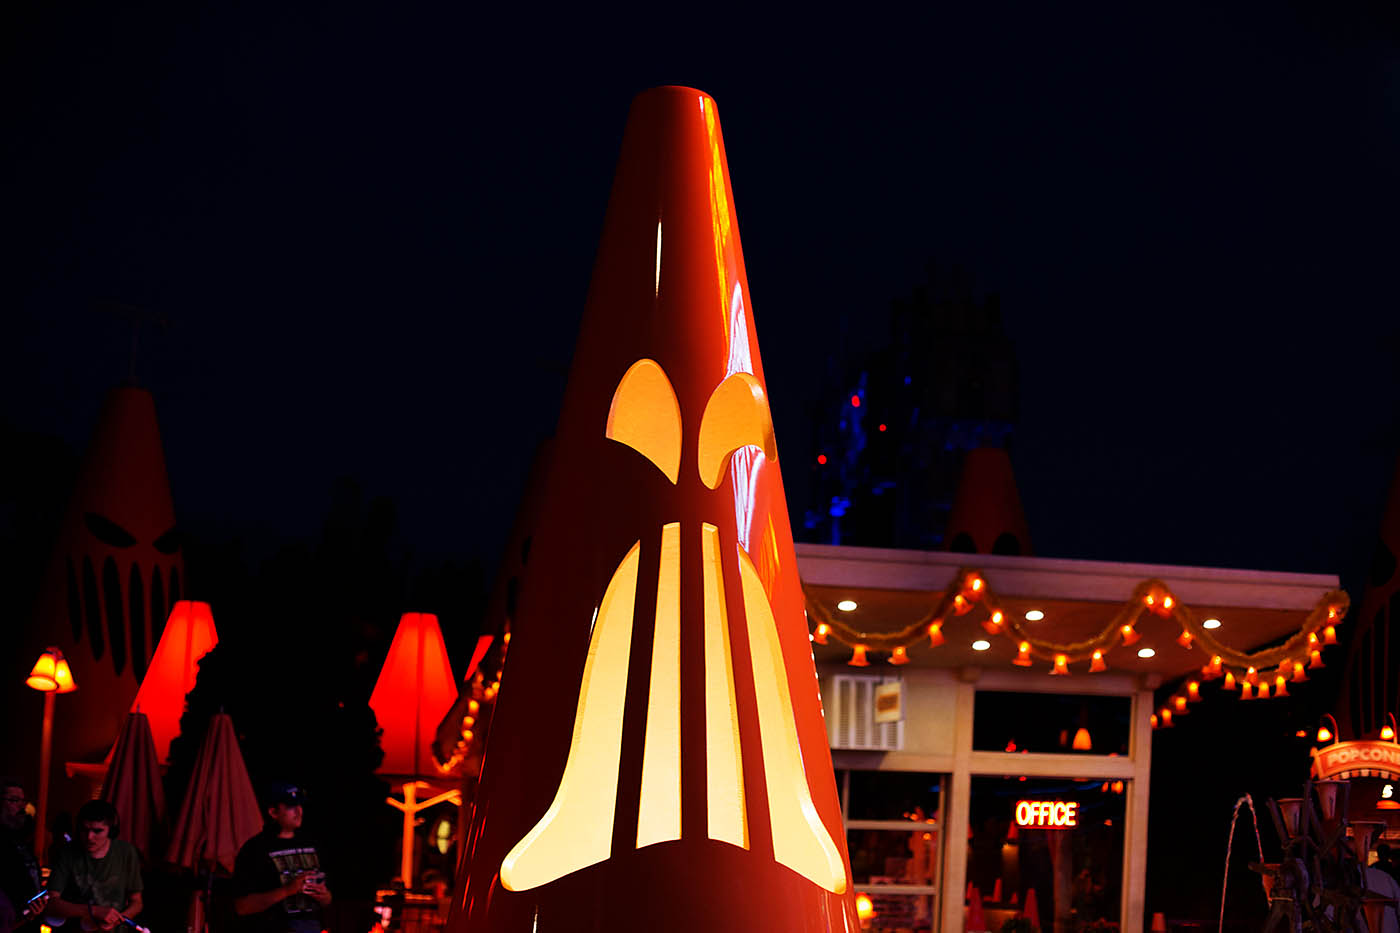 DIY Spoke-y Cone inspired by Haul-O-Ween at Cars Land in Disneyland!